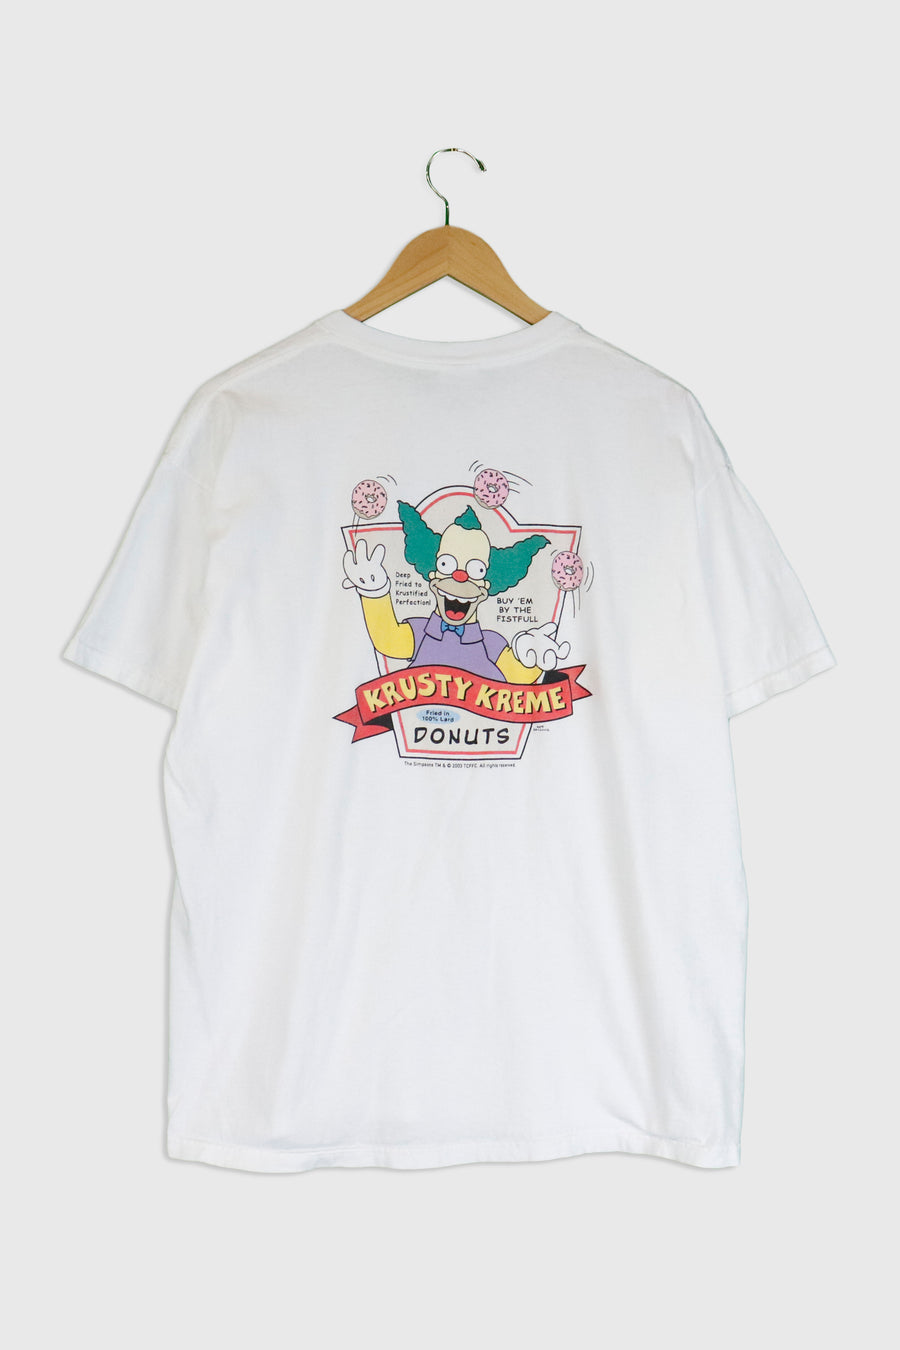 Vintage 2003 The Simpsons  Krusty Kreme Doughnuts Graphic T Shirt Sz XL